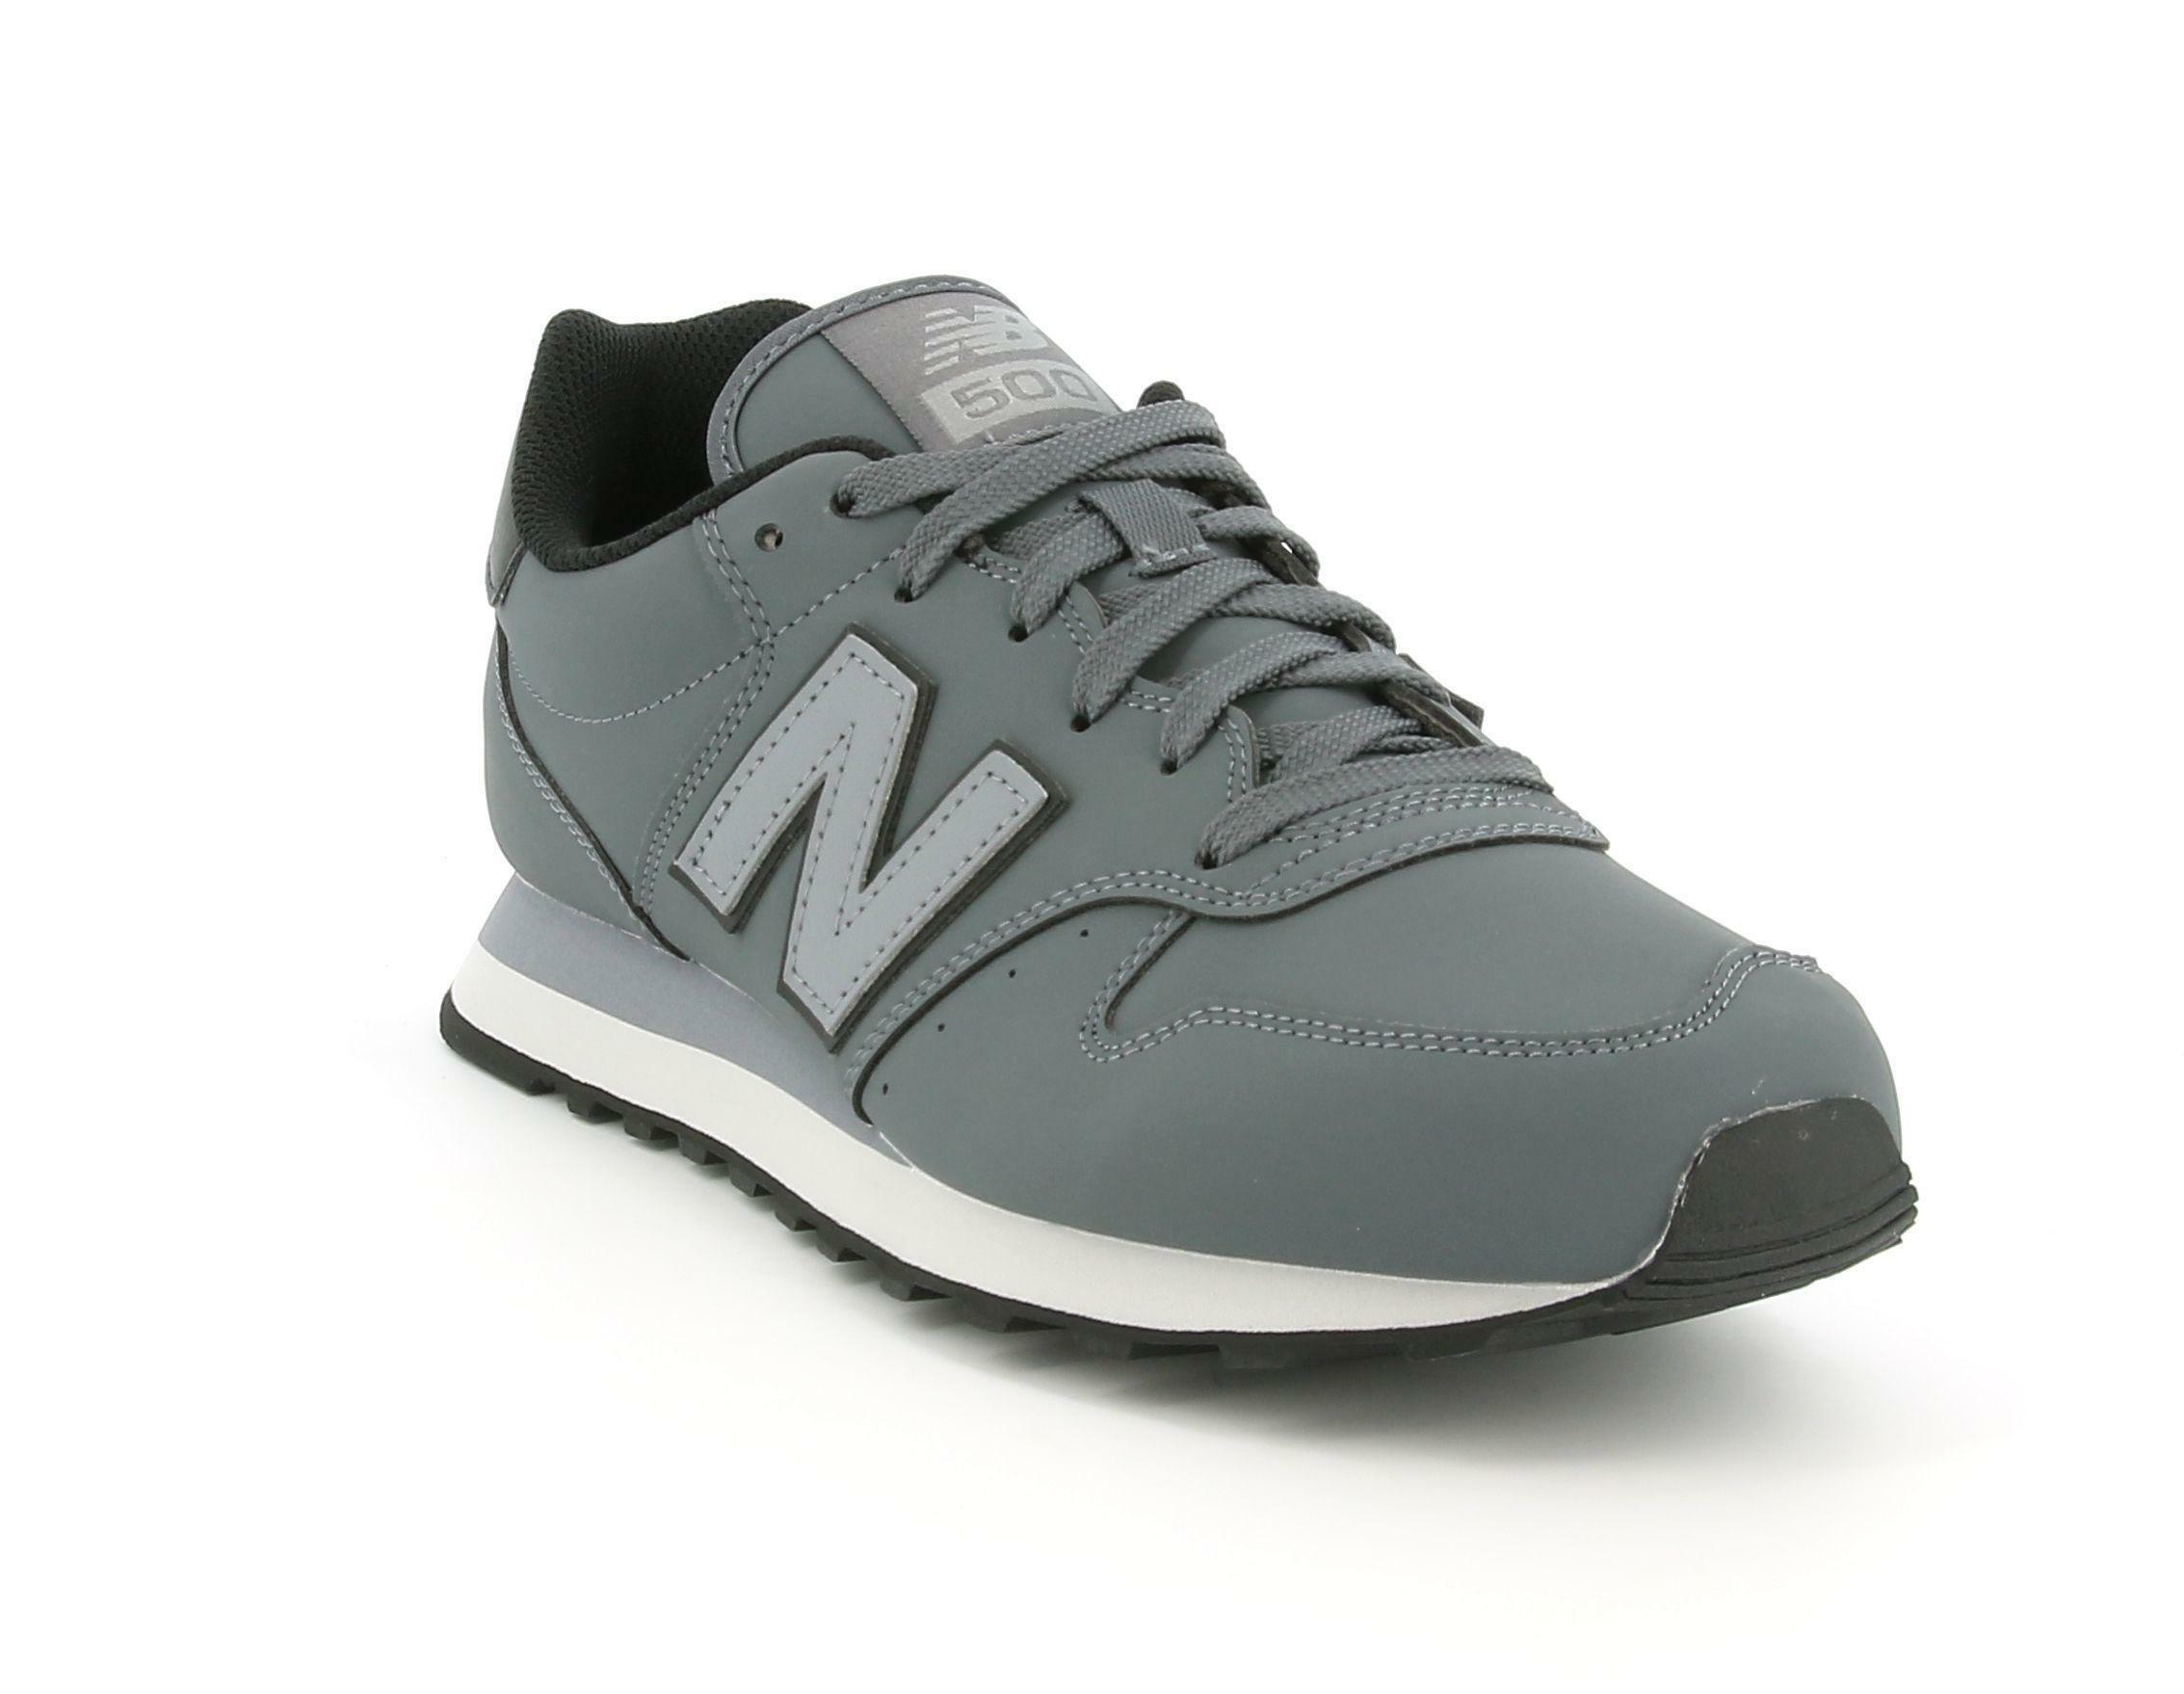 new balance scarpa sportiva new balance gm500lb1. da uomo, colore grigio